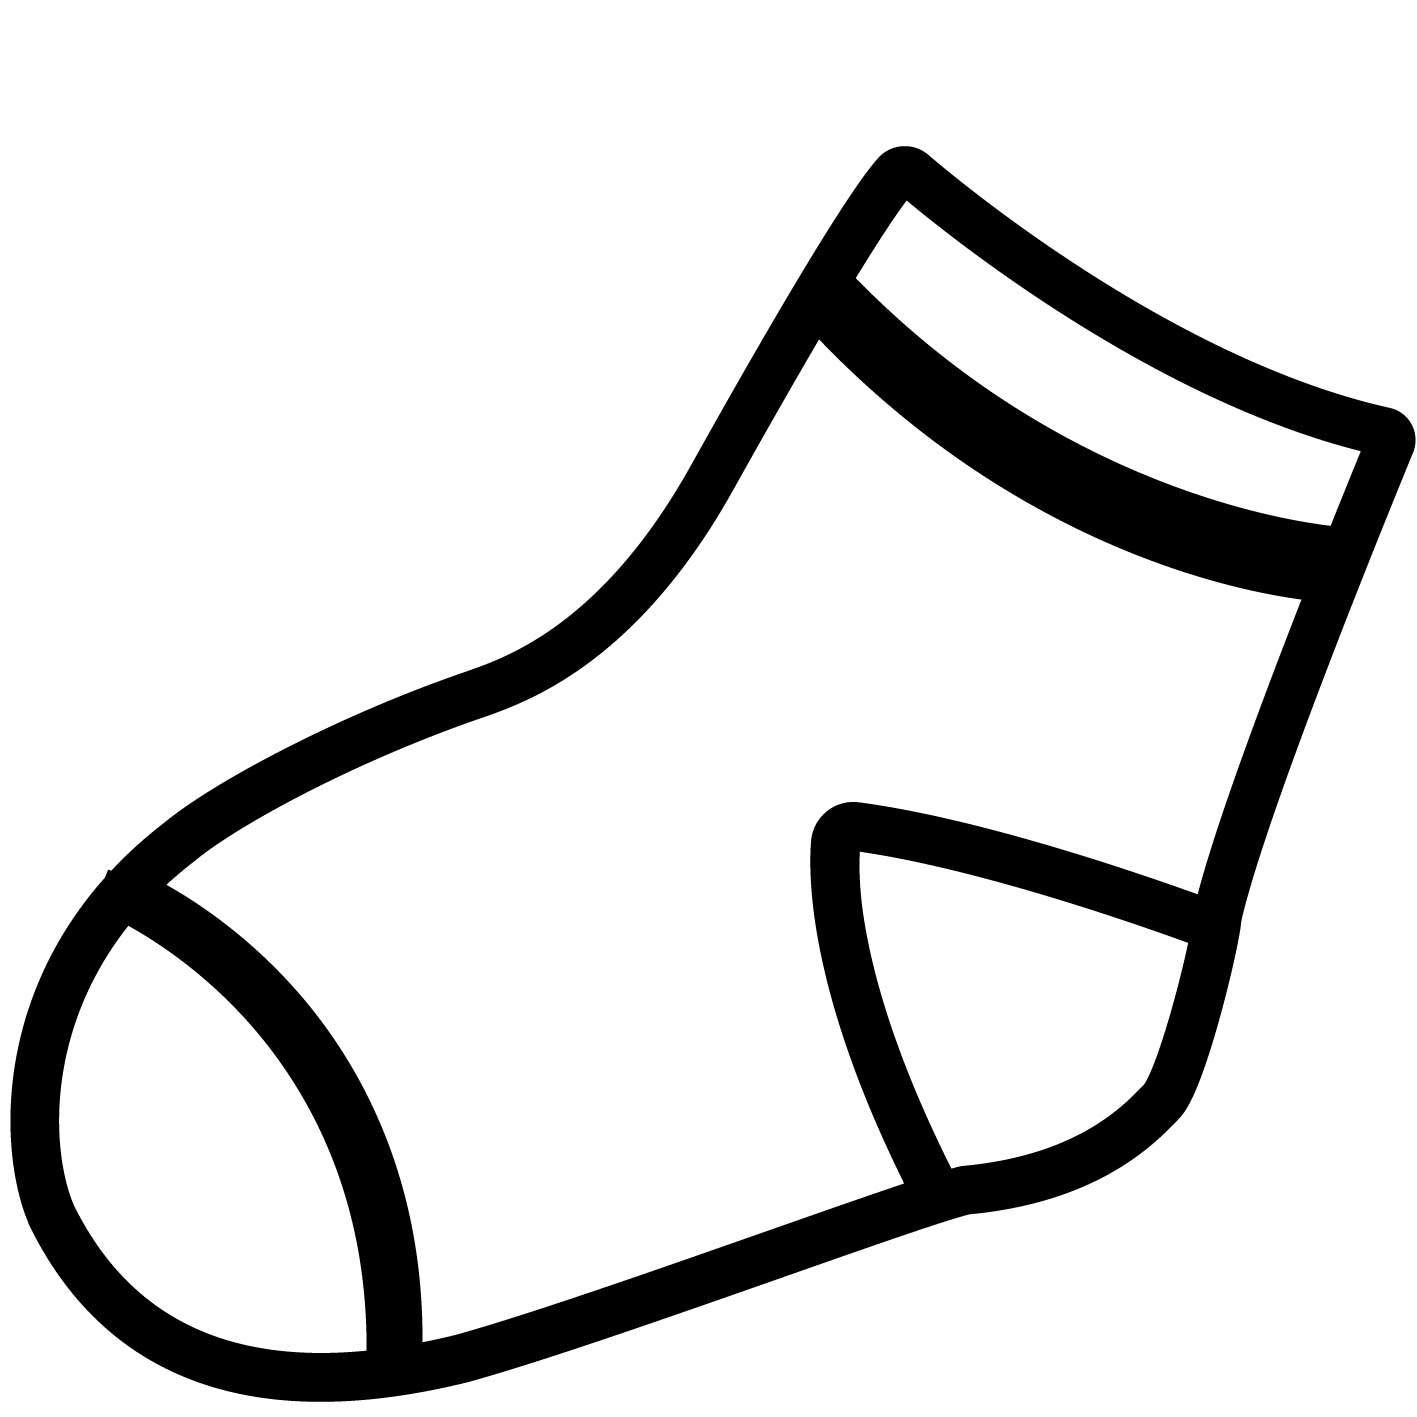 All Socks